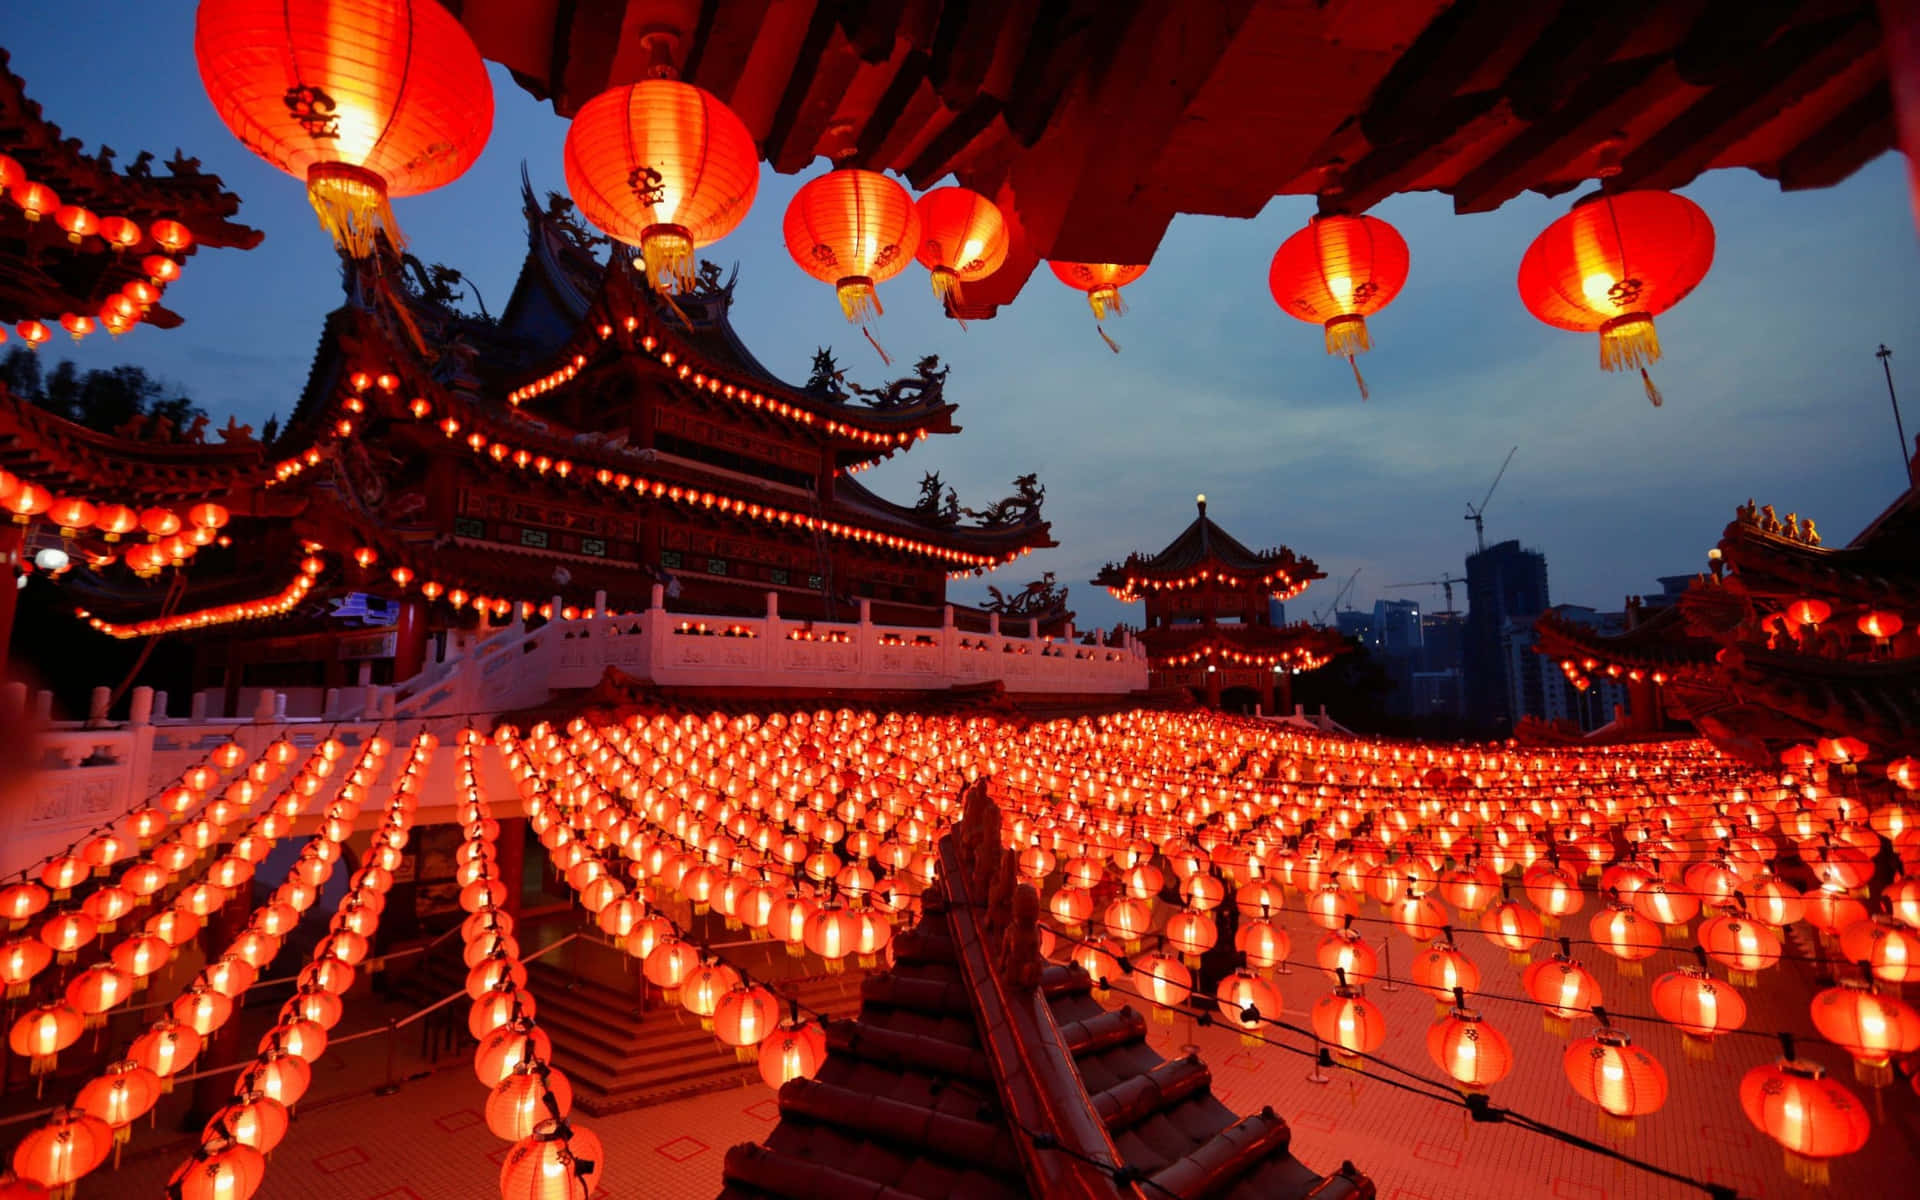 Chinese paper lanterns hanging from a bridge